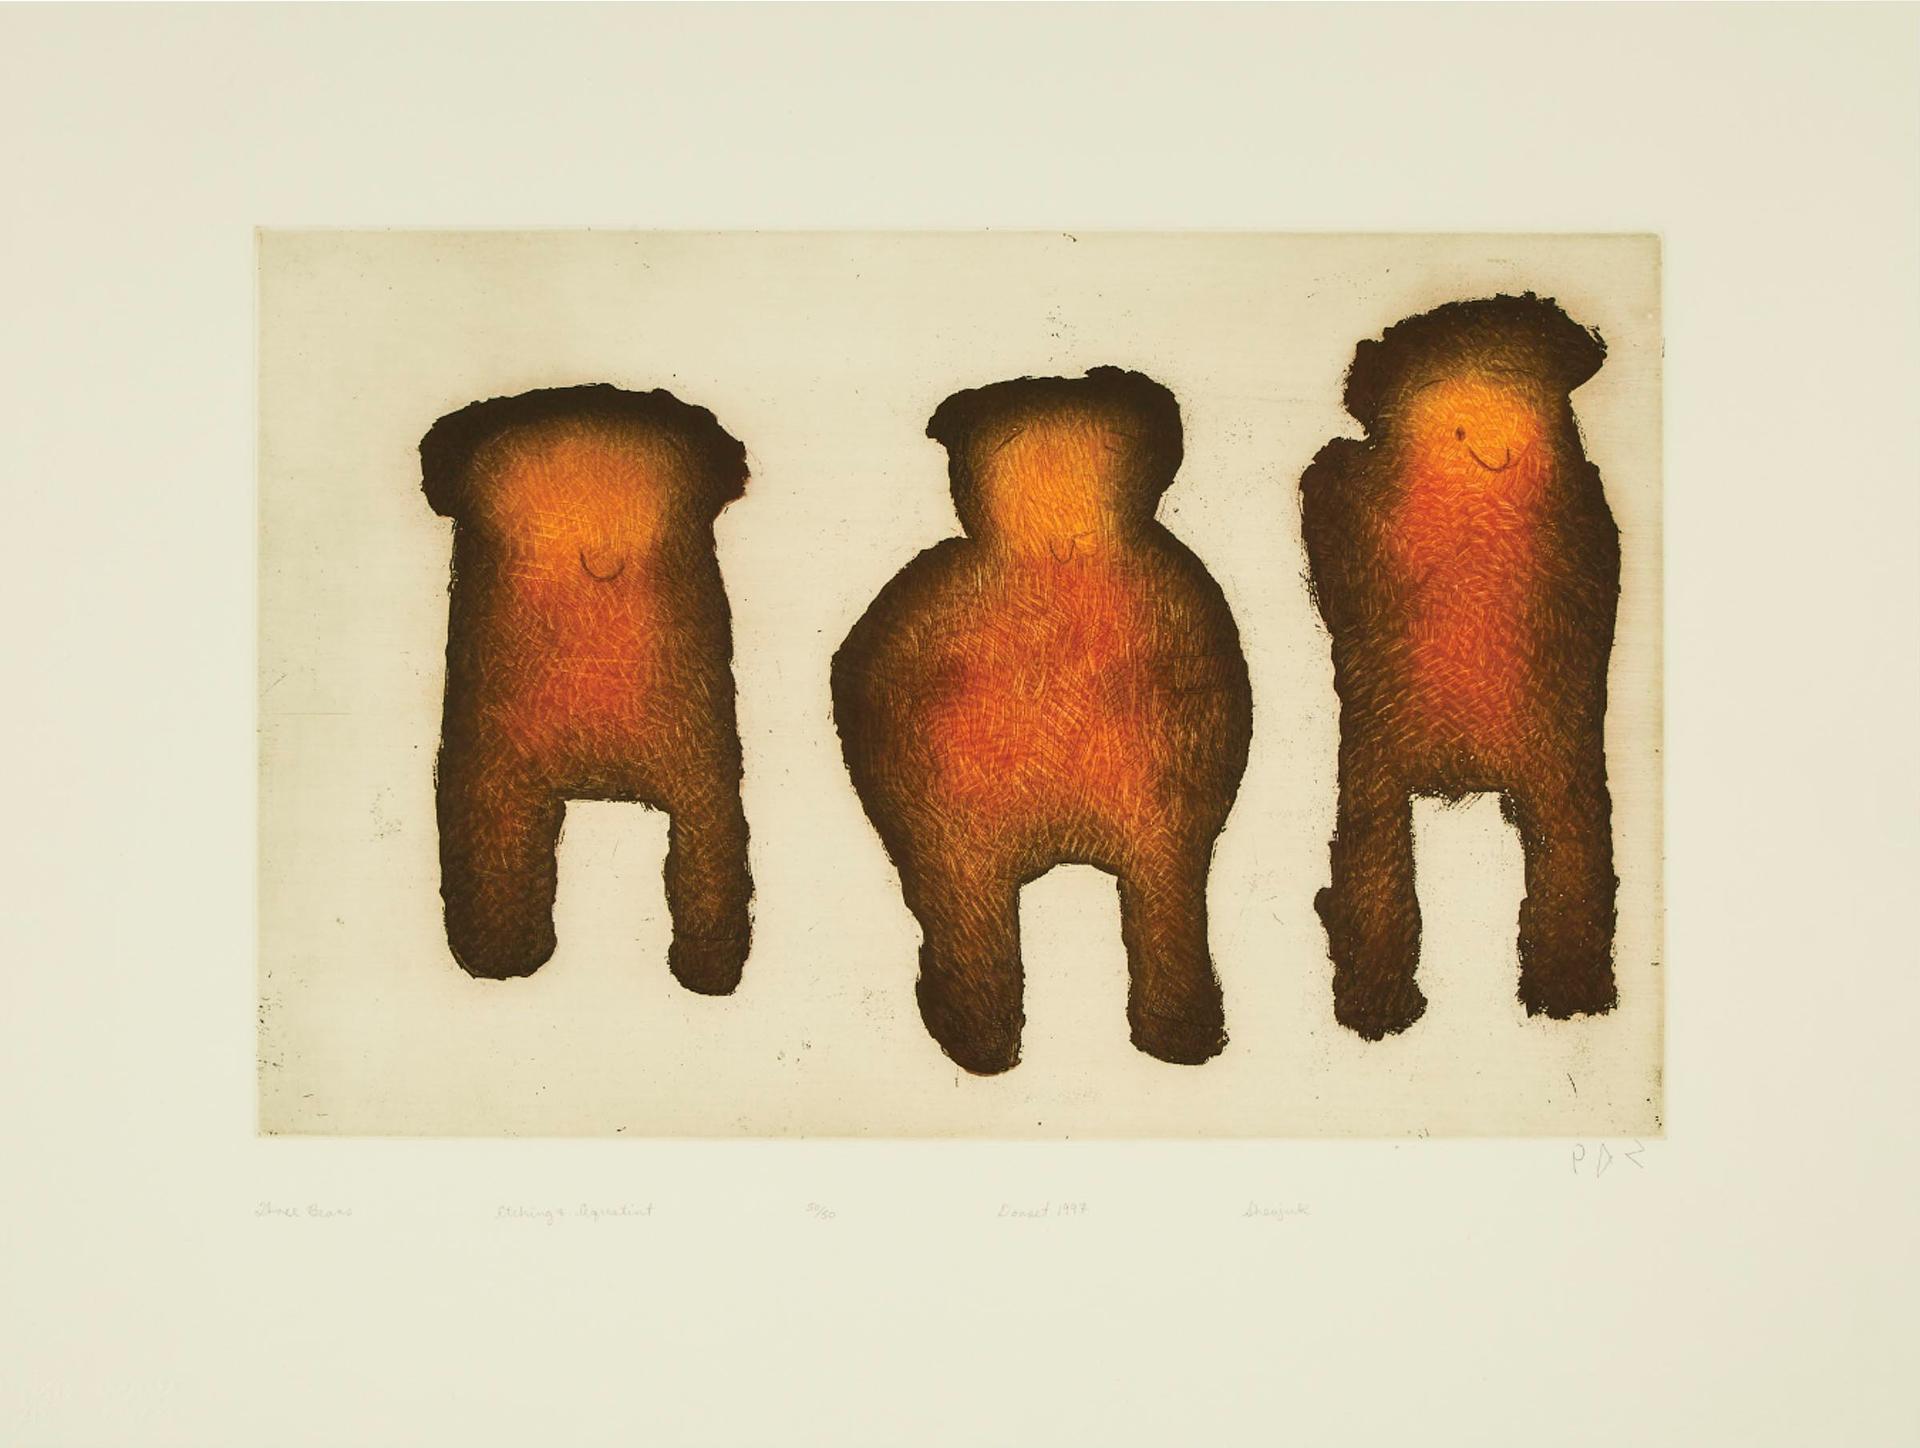 Sheojuk Etidlooie (1932-1999) - Three Bears, 1997